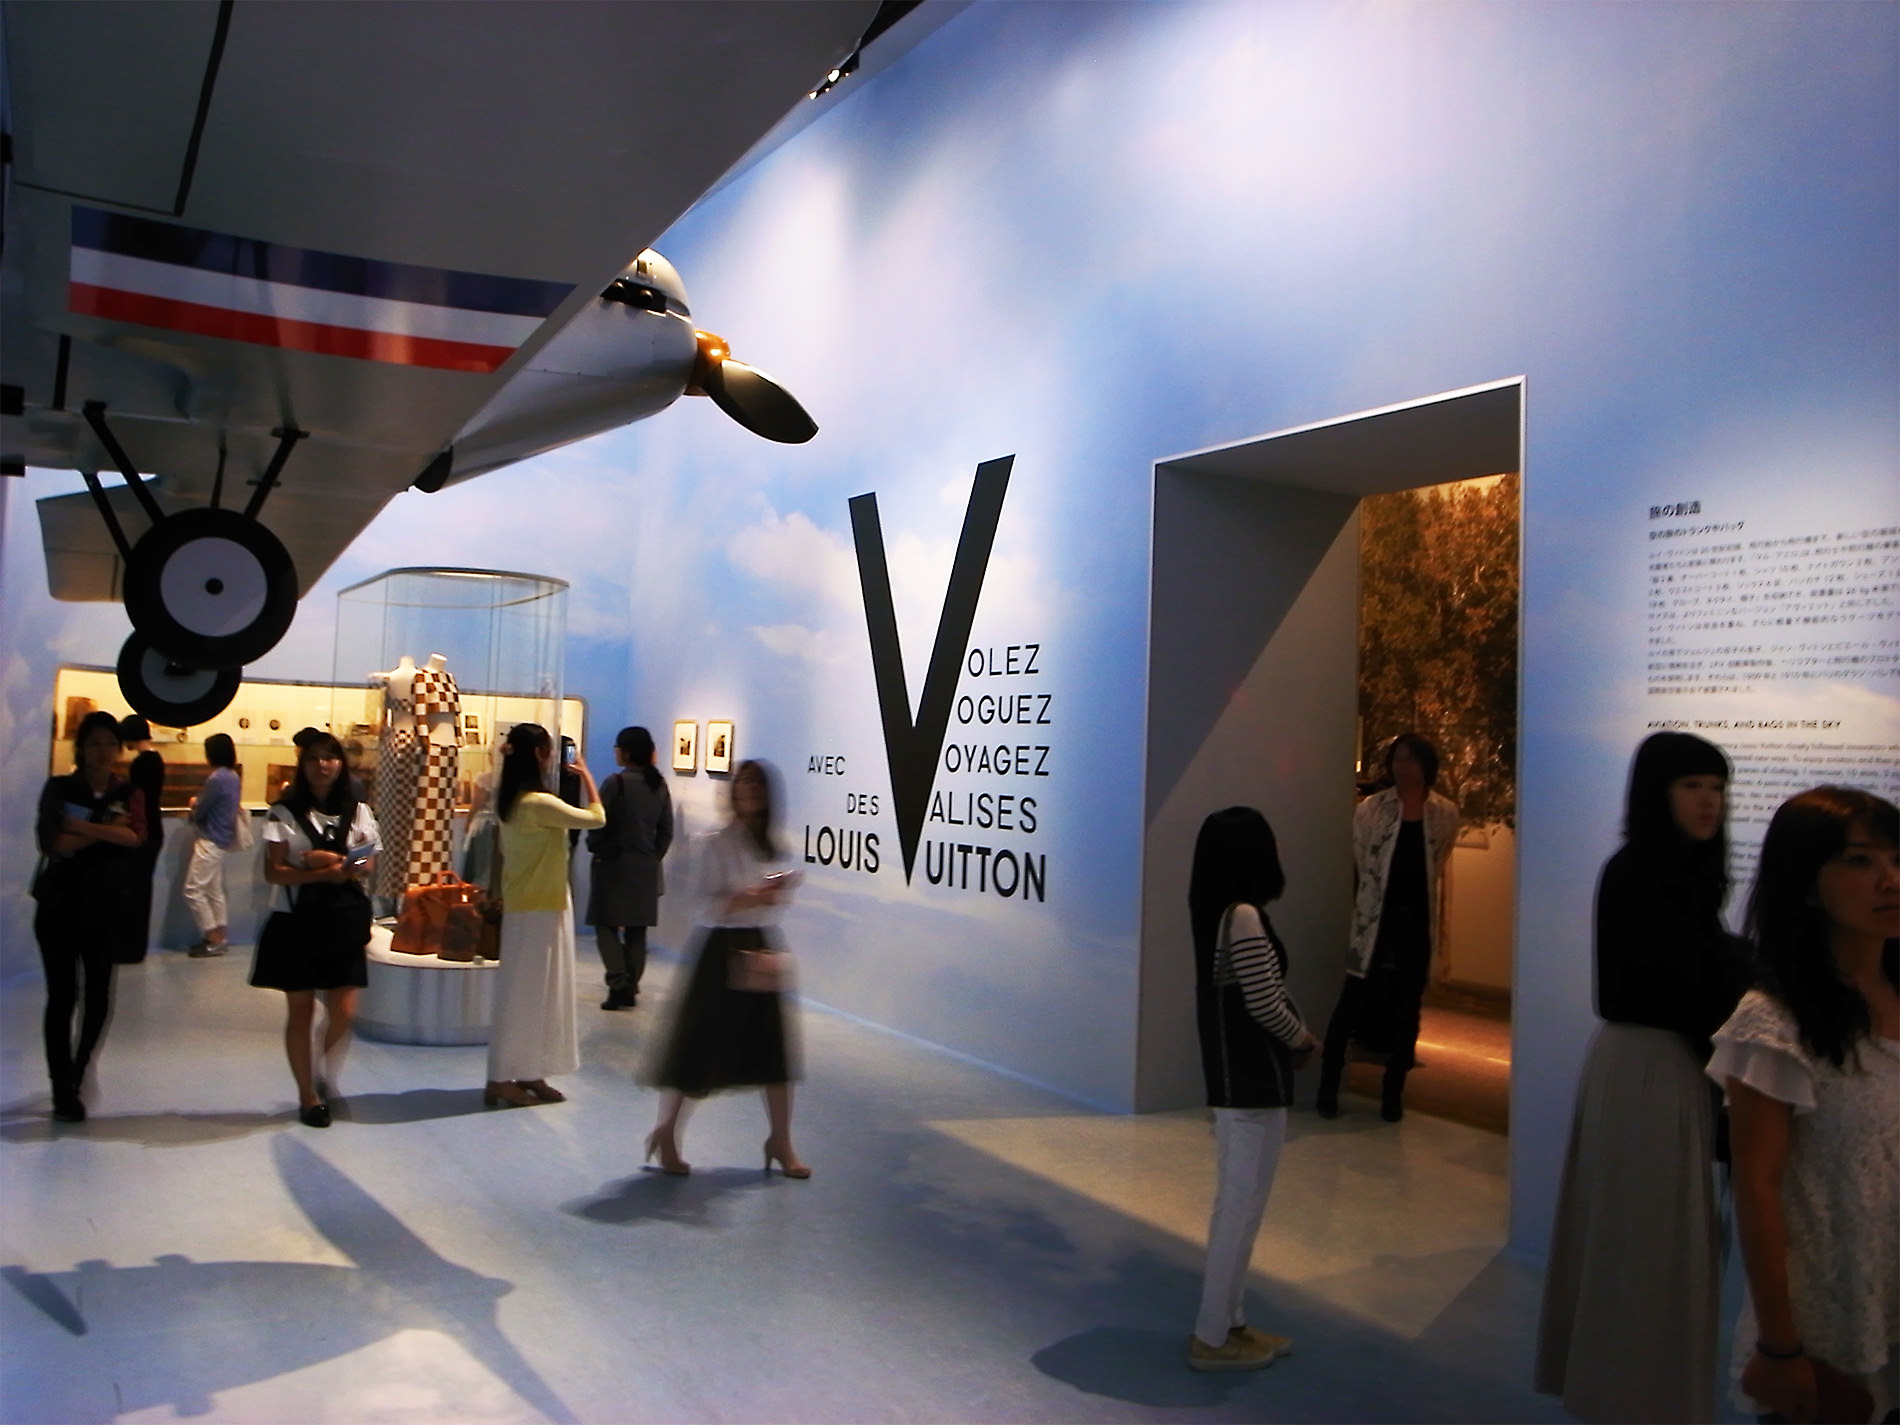 「Volez, Voguez, Voyagez – Louis Vuitton」展 2016 東京